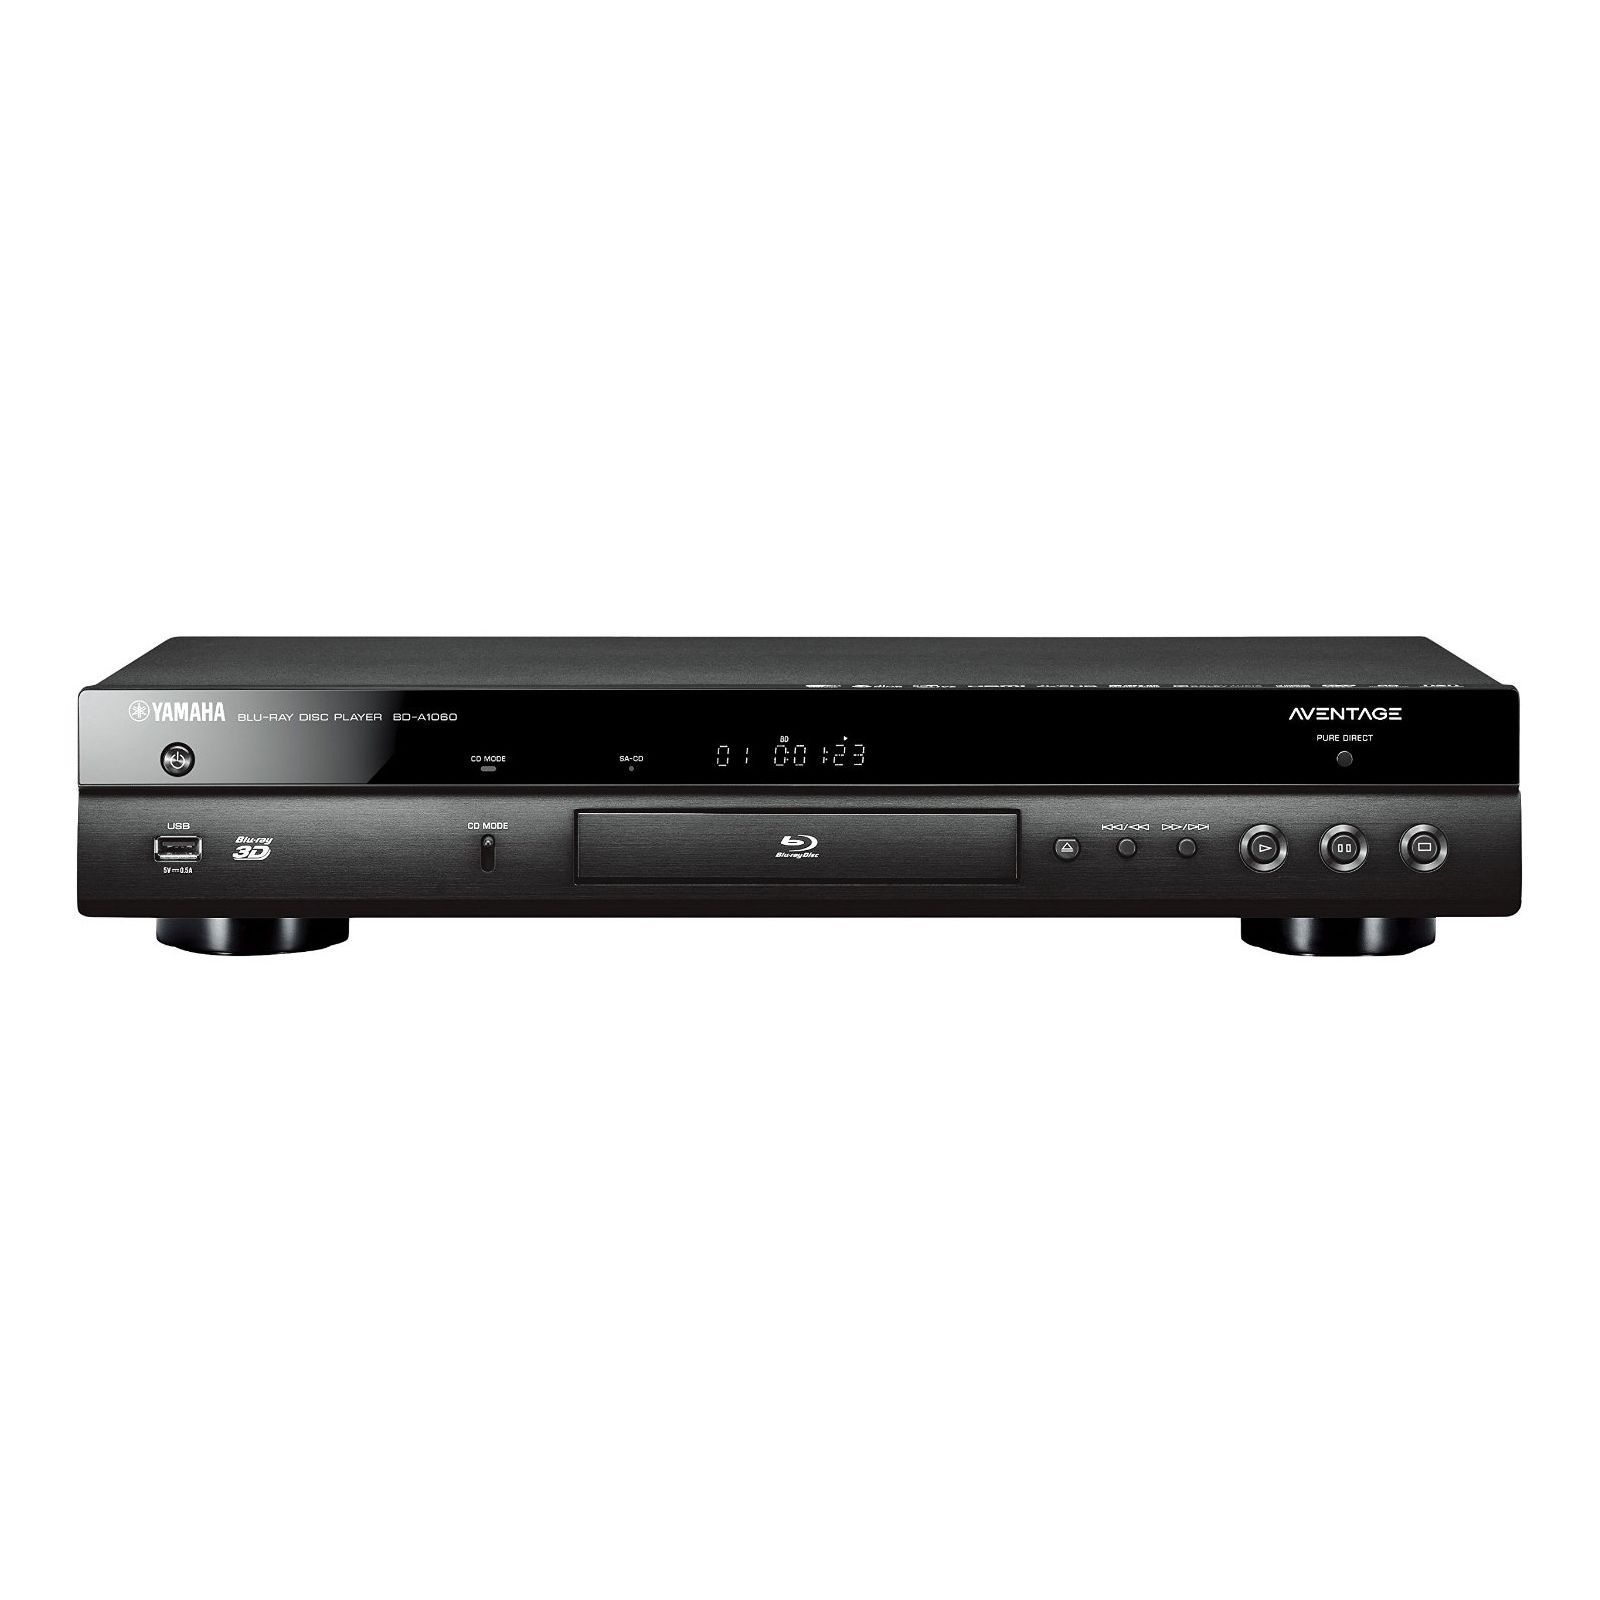 ​Yamaha AVENTAGE BD-A1060 Blu-ray Disc Player​